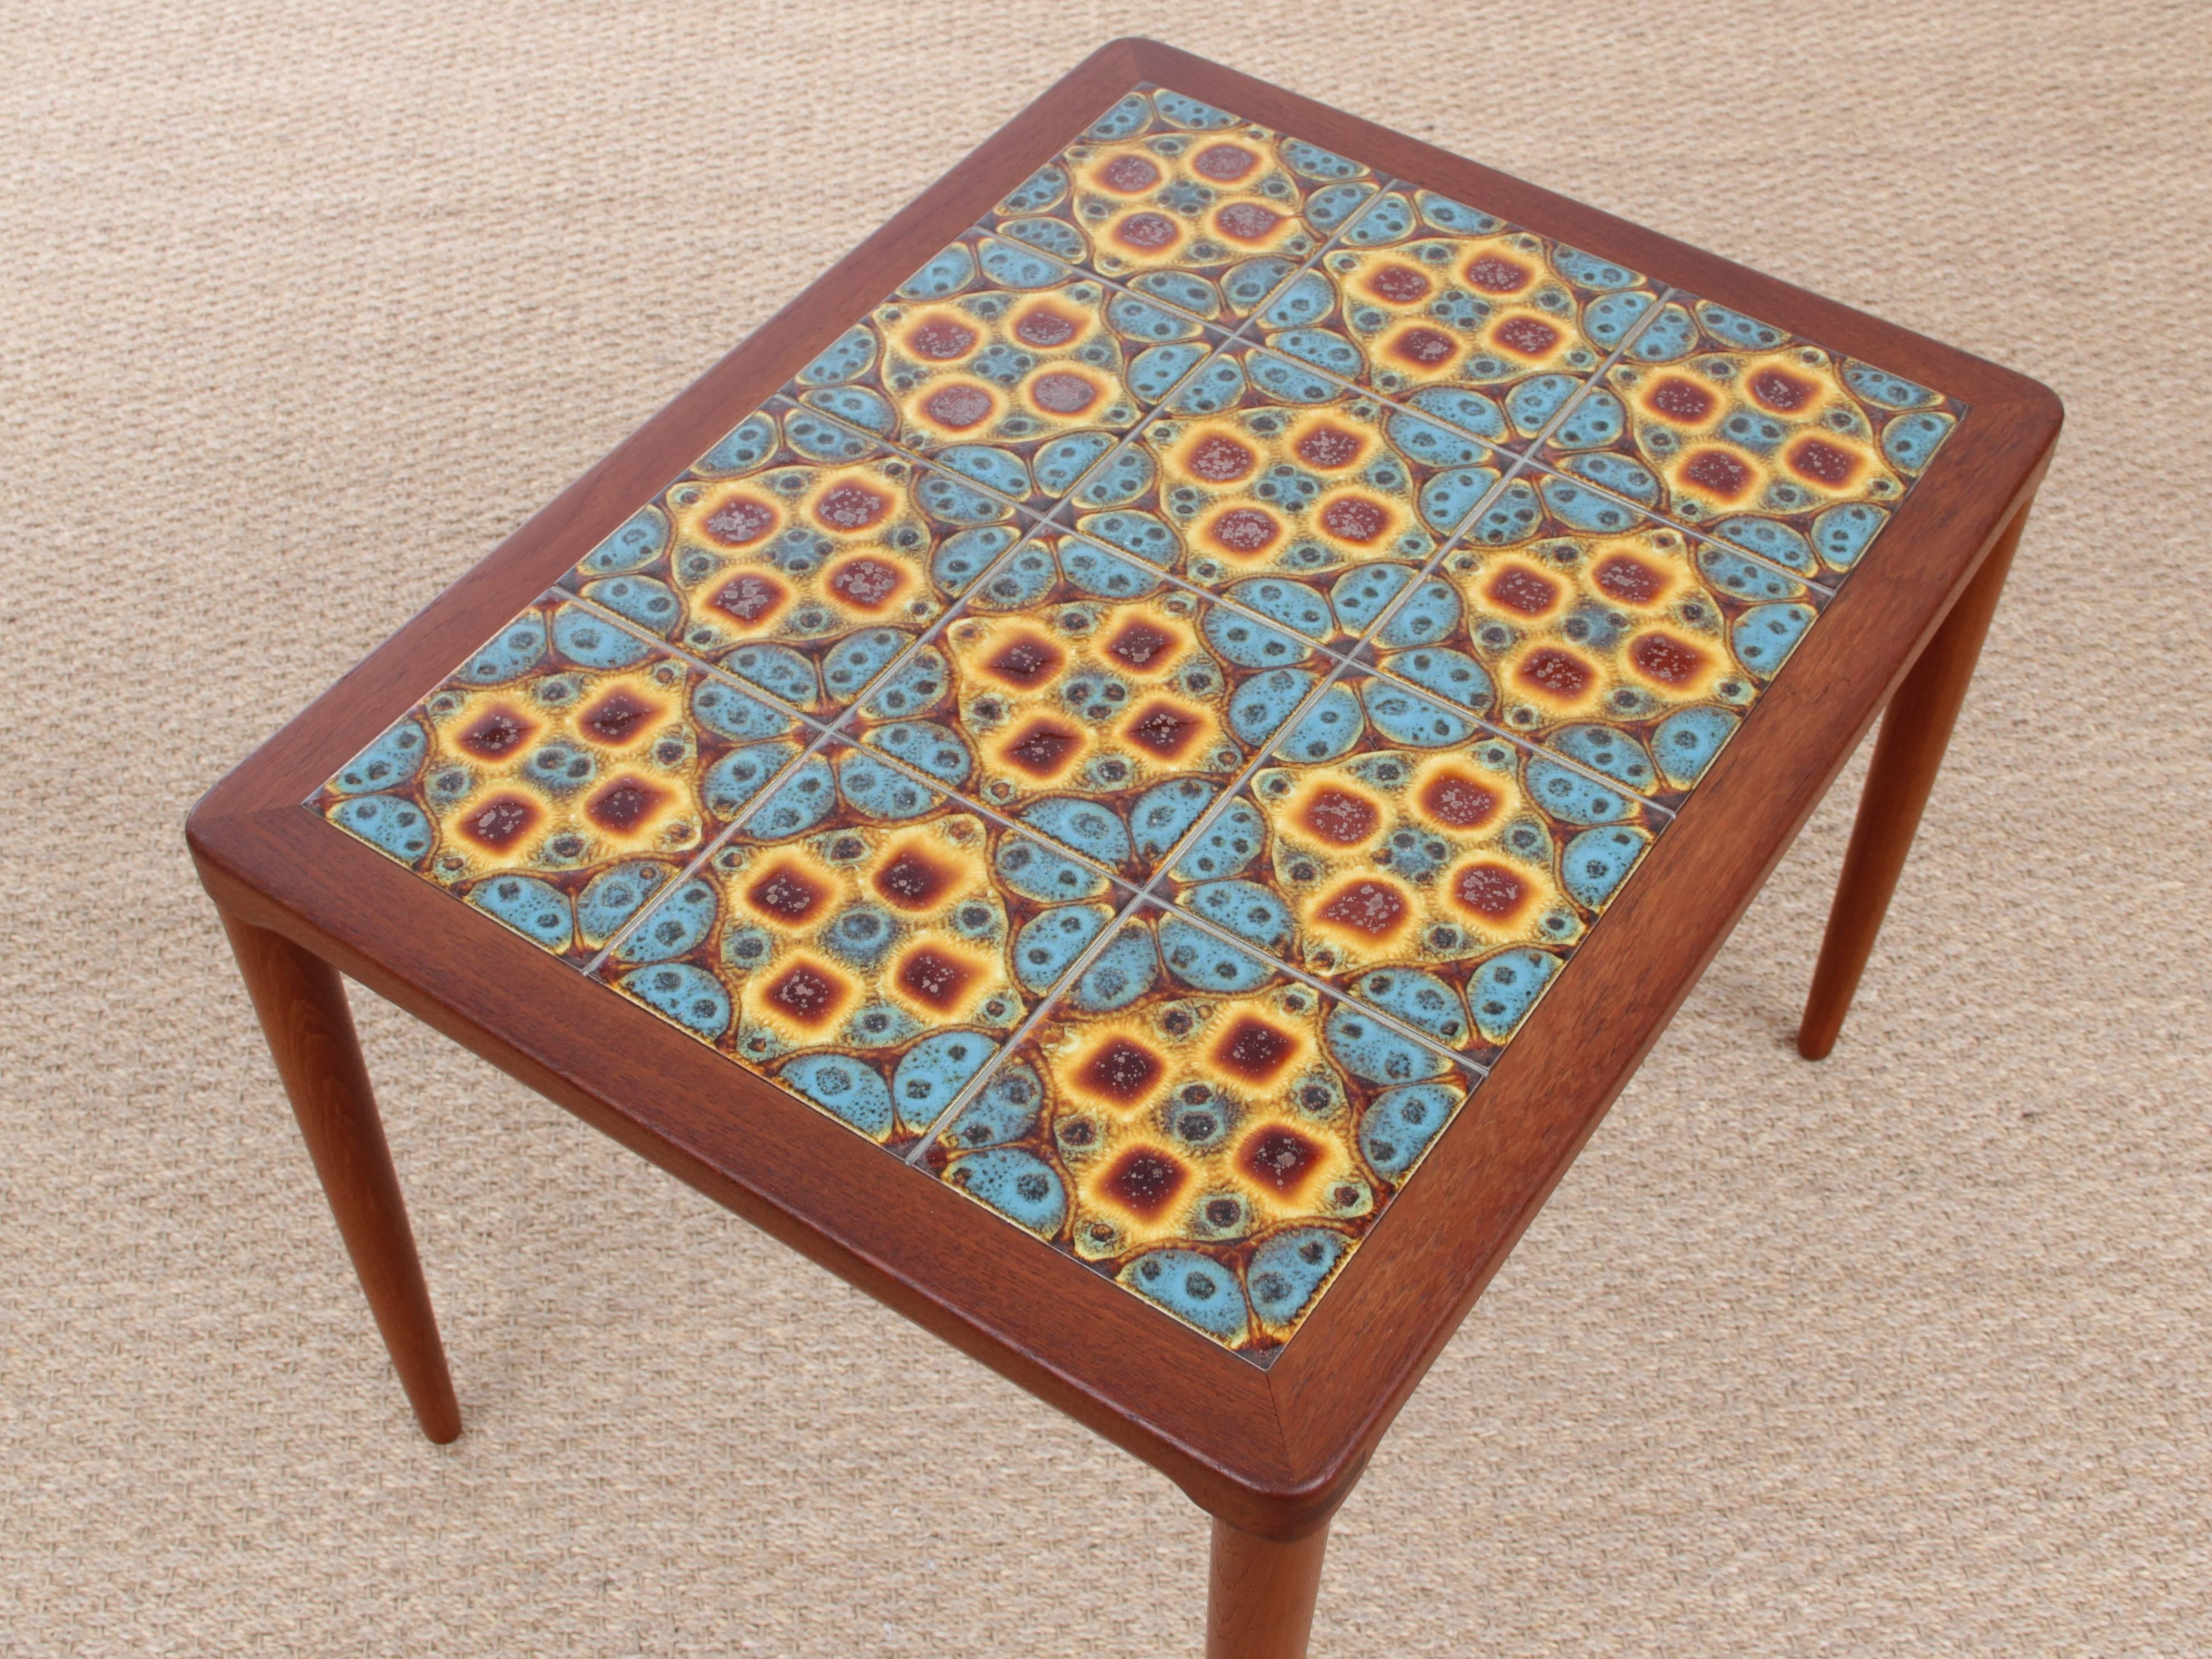 Danish Mid-Century Modern Scandinavian Teak Coffee Table with Ceramic Tiles by H.W. Kle